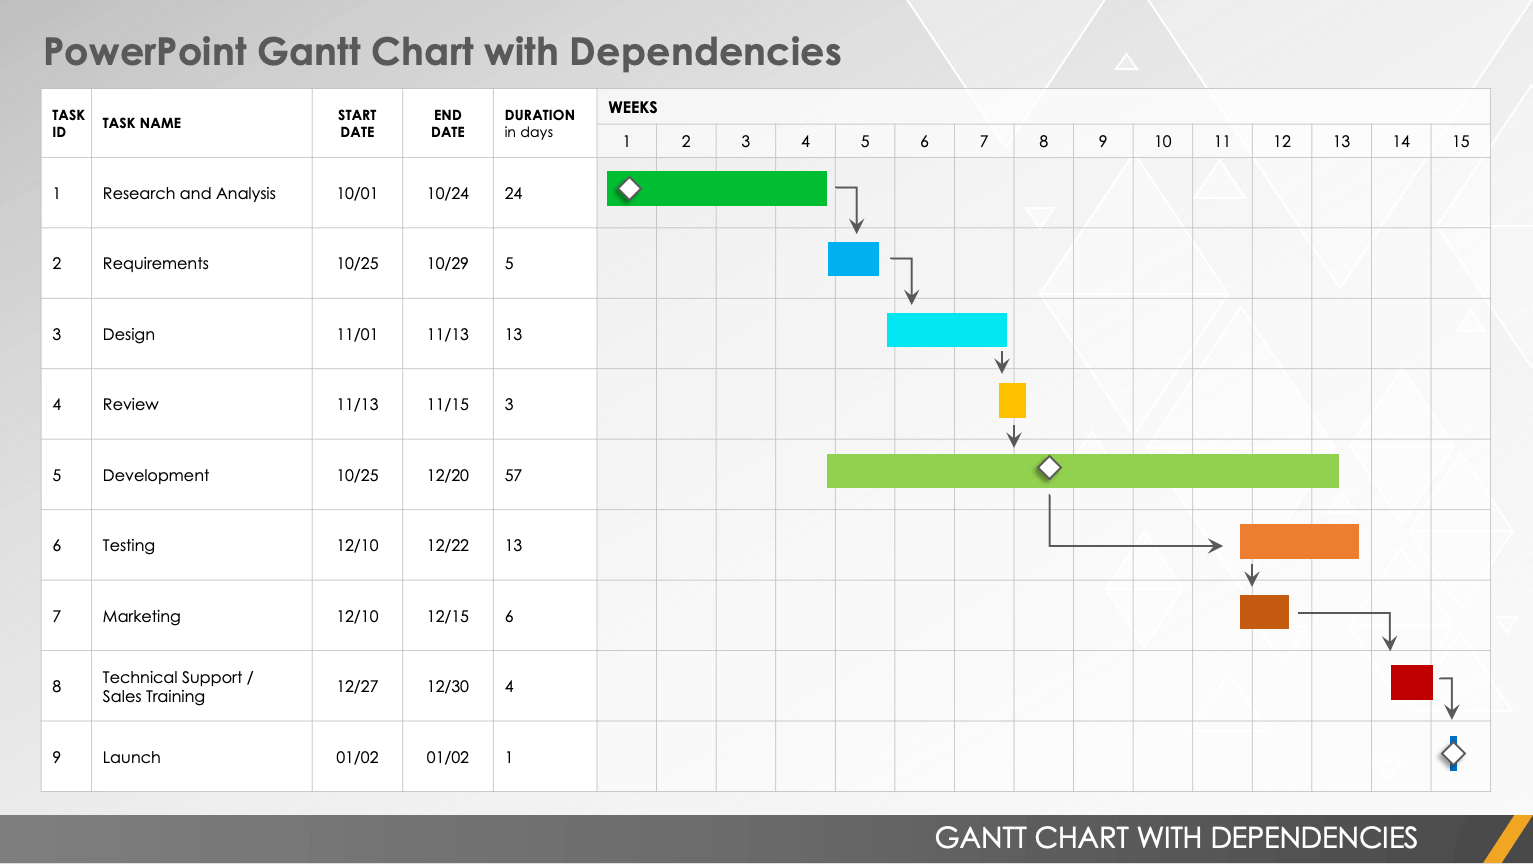 PowerPoint Gantt Chart with Dependencies Template from Smartsheet